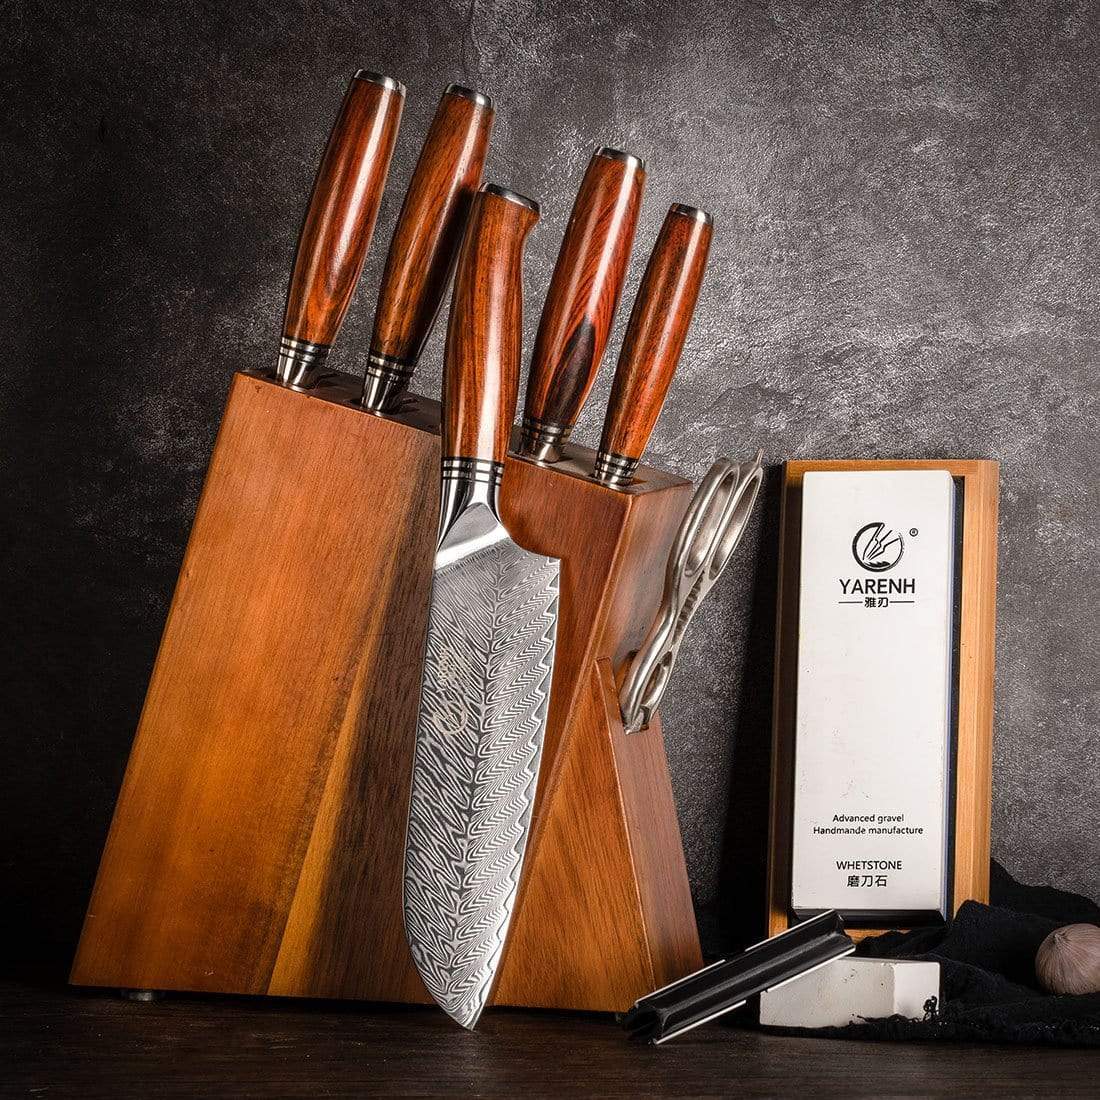 Damascus chef knife block set 8 piece-KTF Series